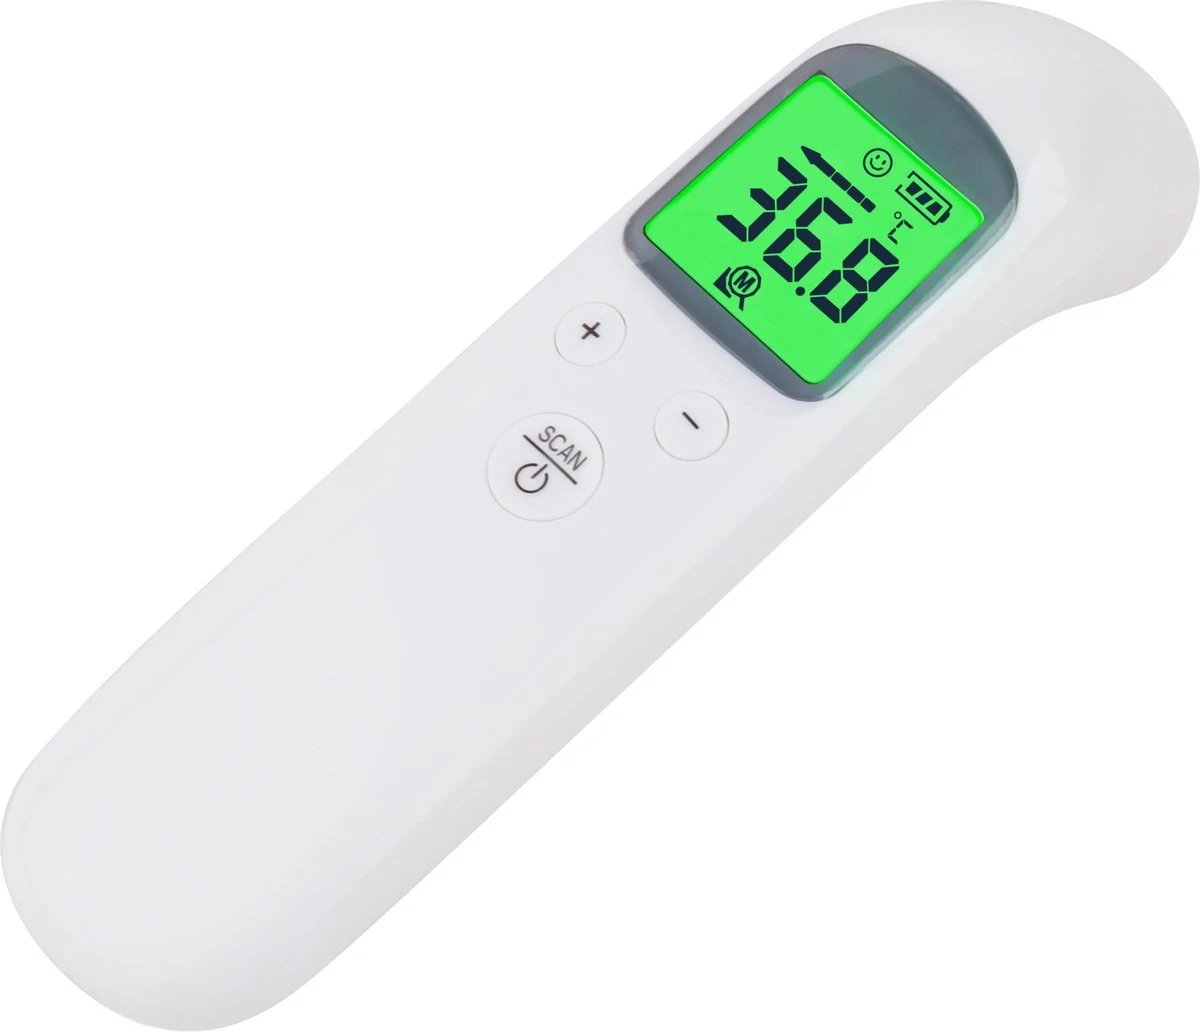 WBTT thermometer